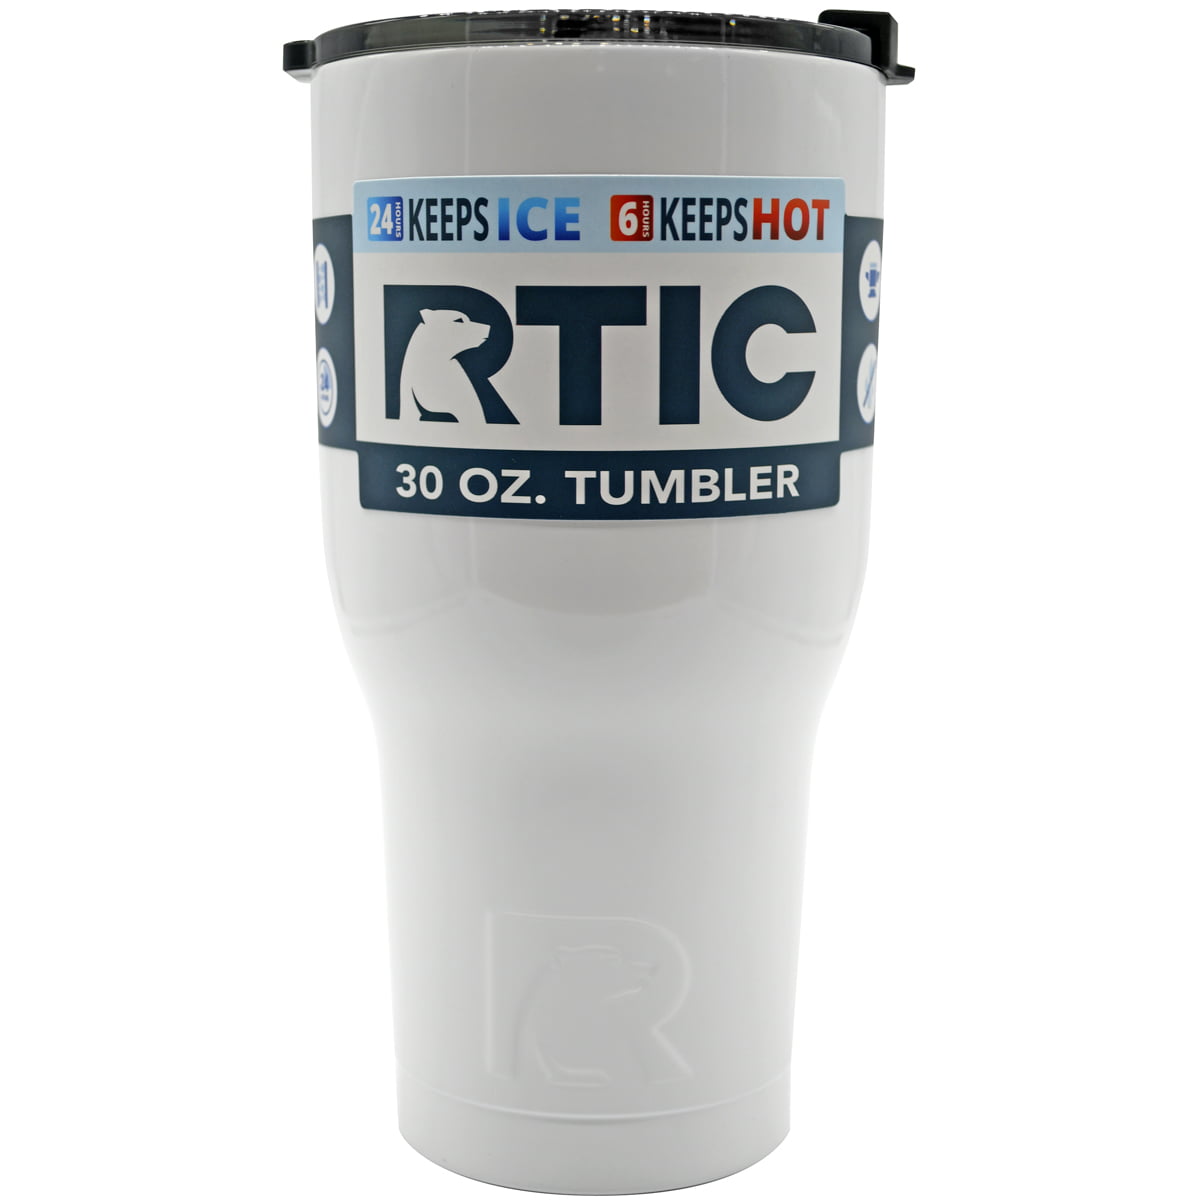 RTIC 30oz Tumbler Brand New in Box 